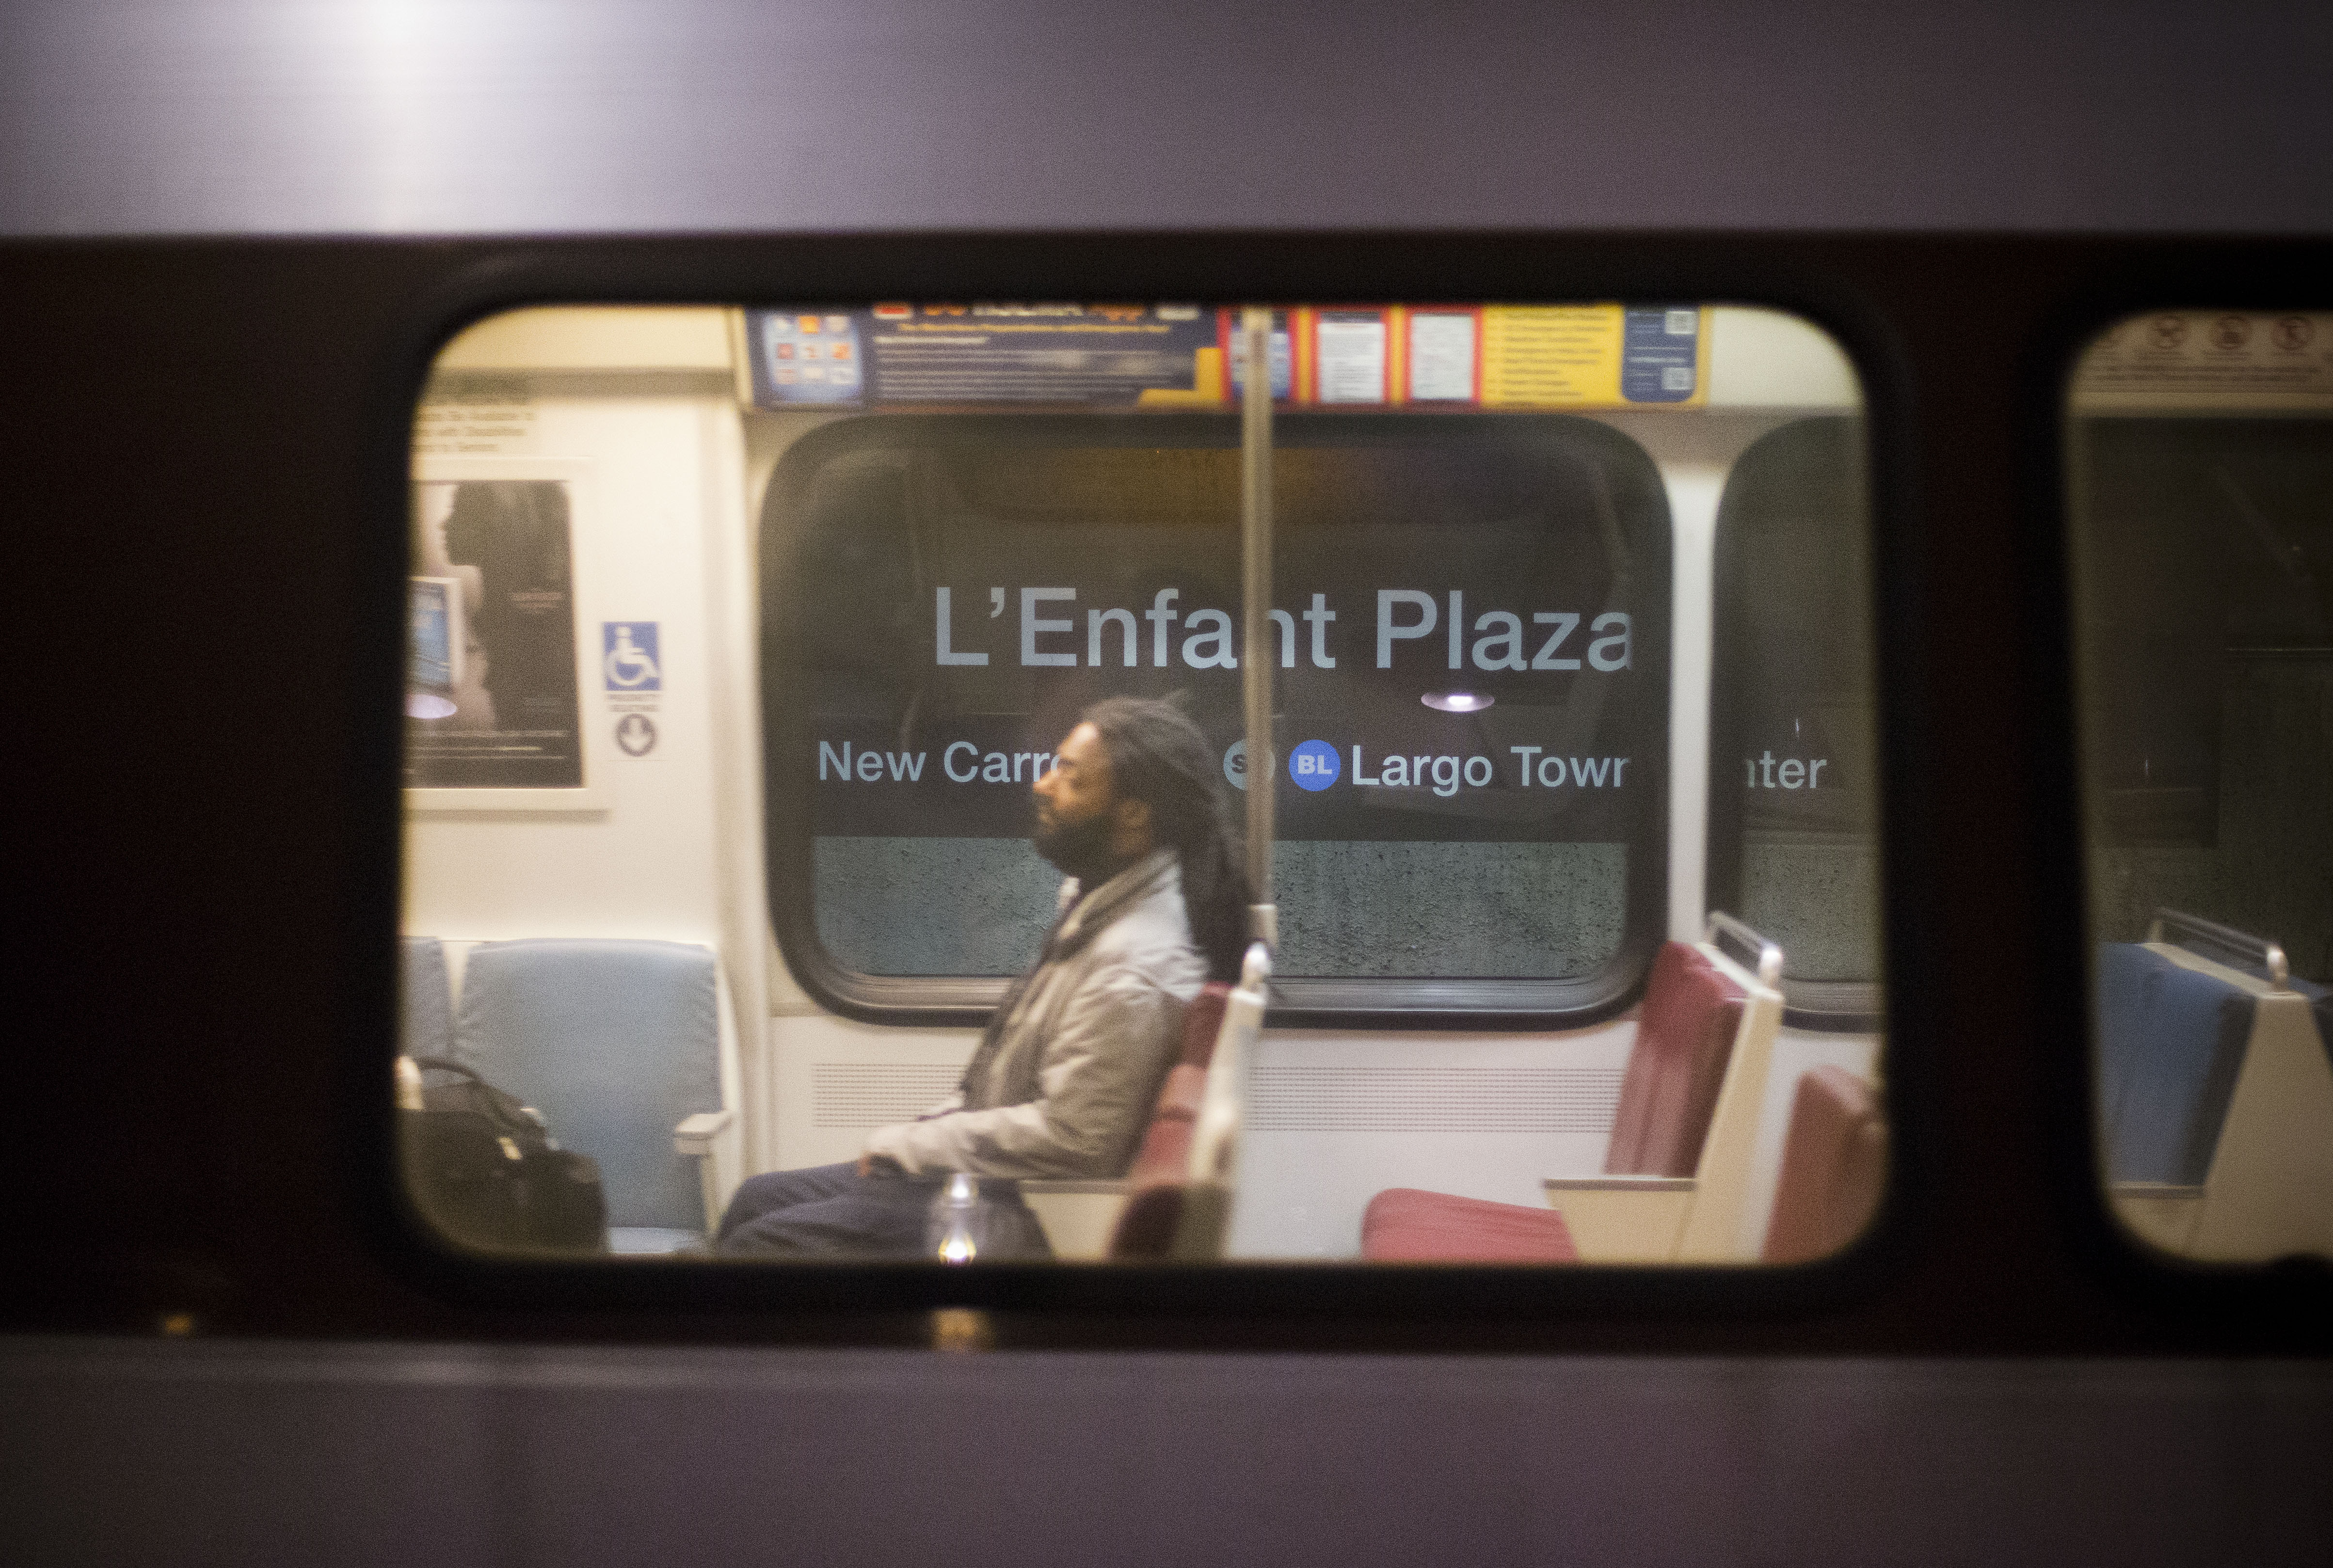 Metro GM pens letter 1 year after deadly L’Enfant Plaza incident